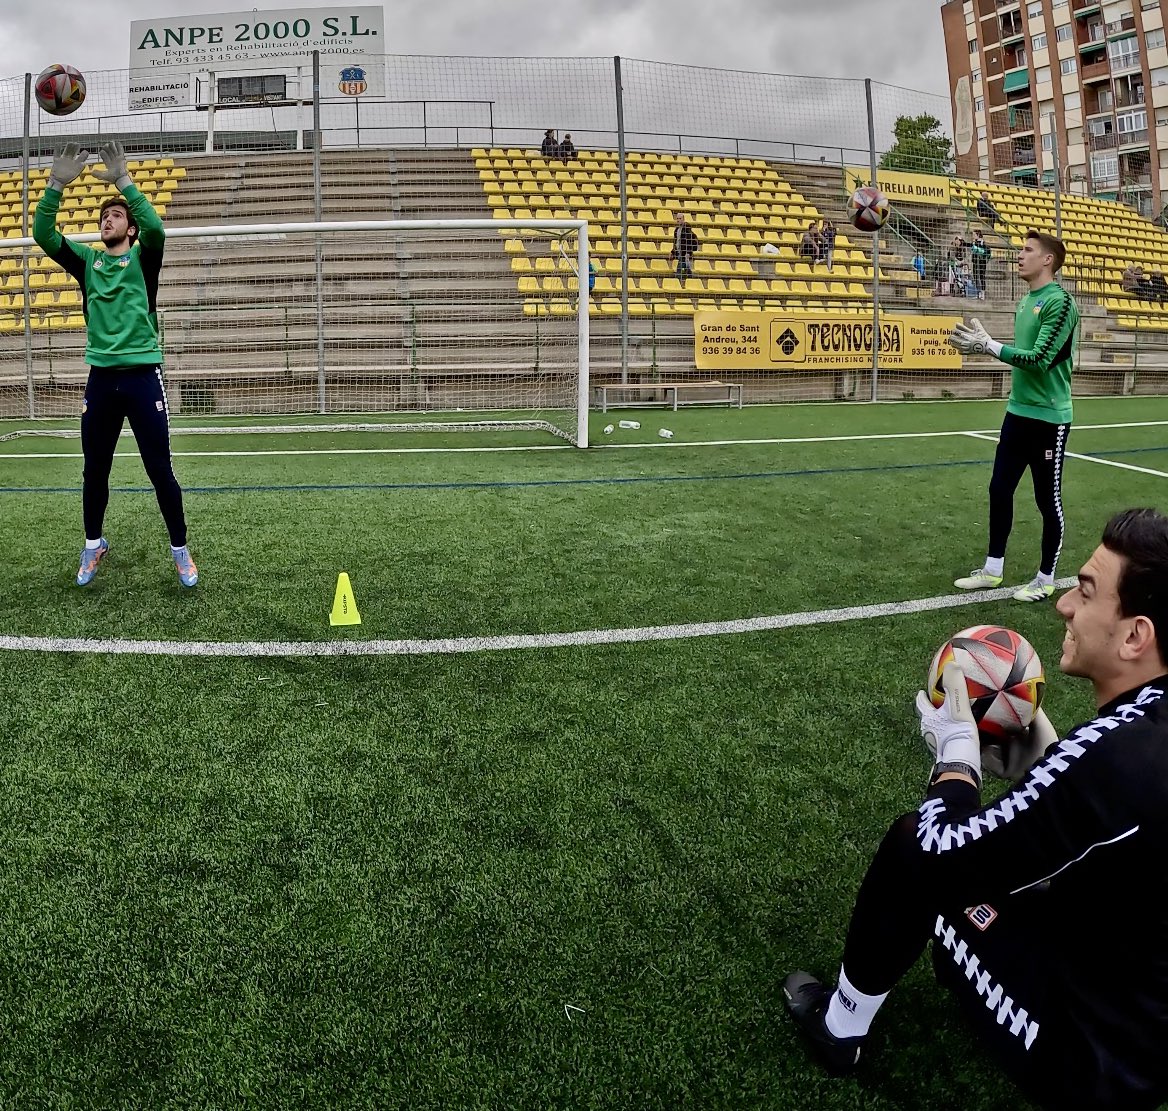 Semana de PLAY OFF! 🛠️🔥🧤

#theteaminsidetheteam #goalkeepertraining #entrenadordeporteros